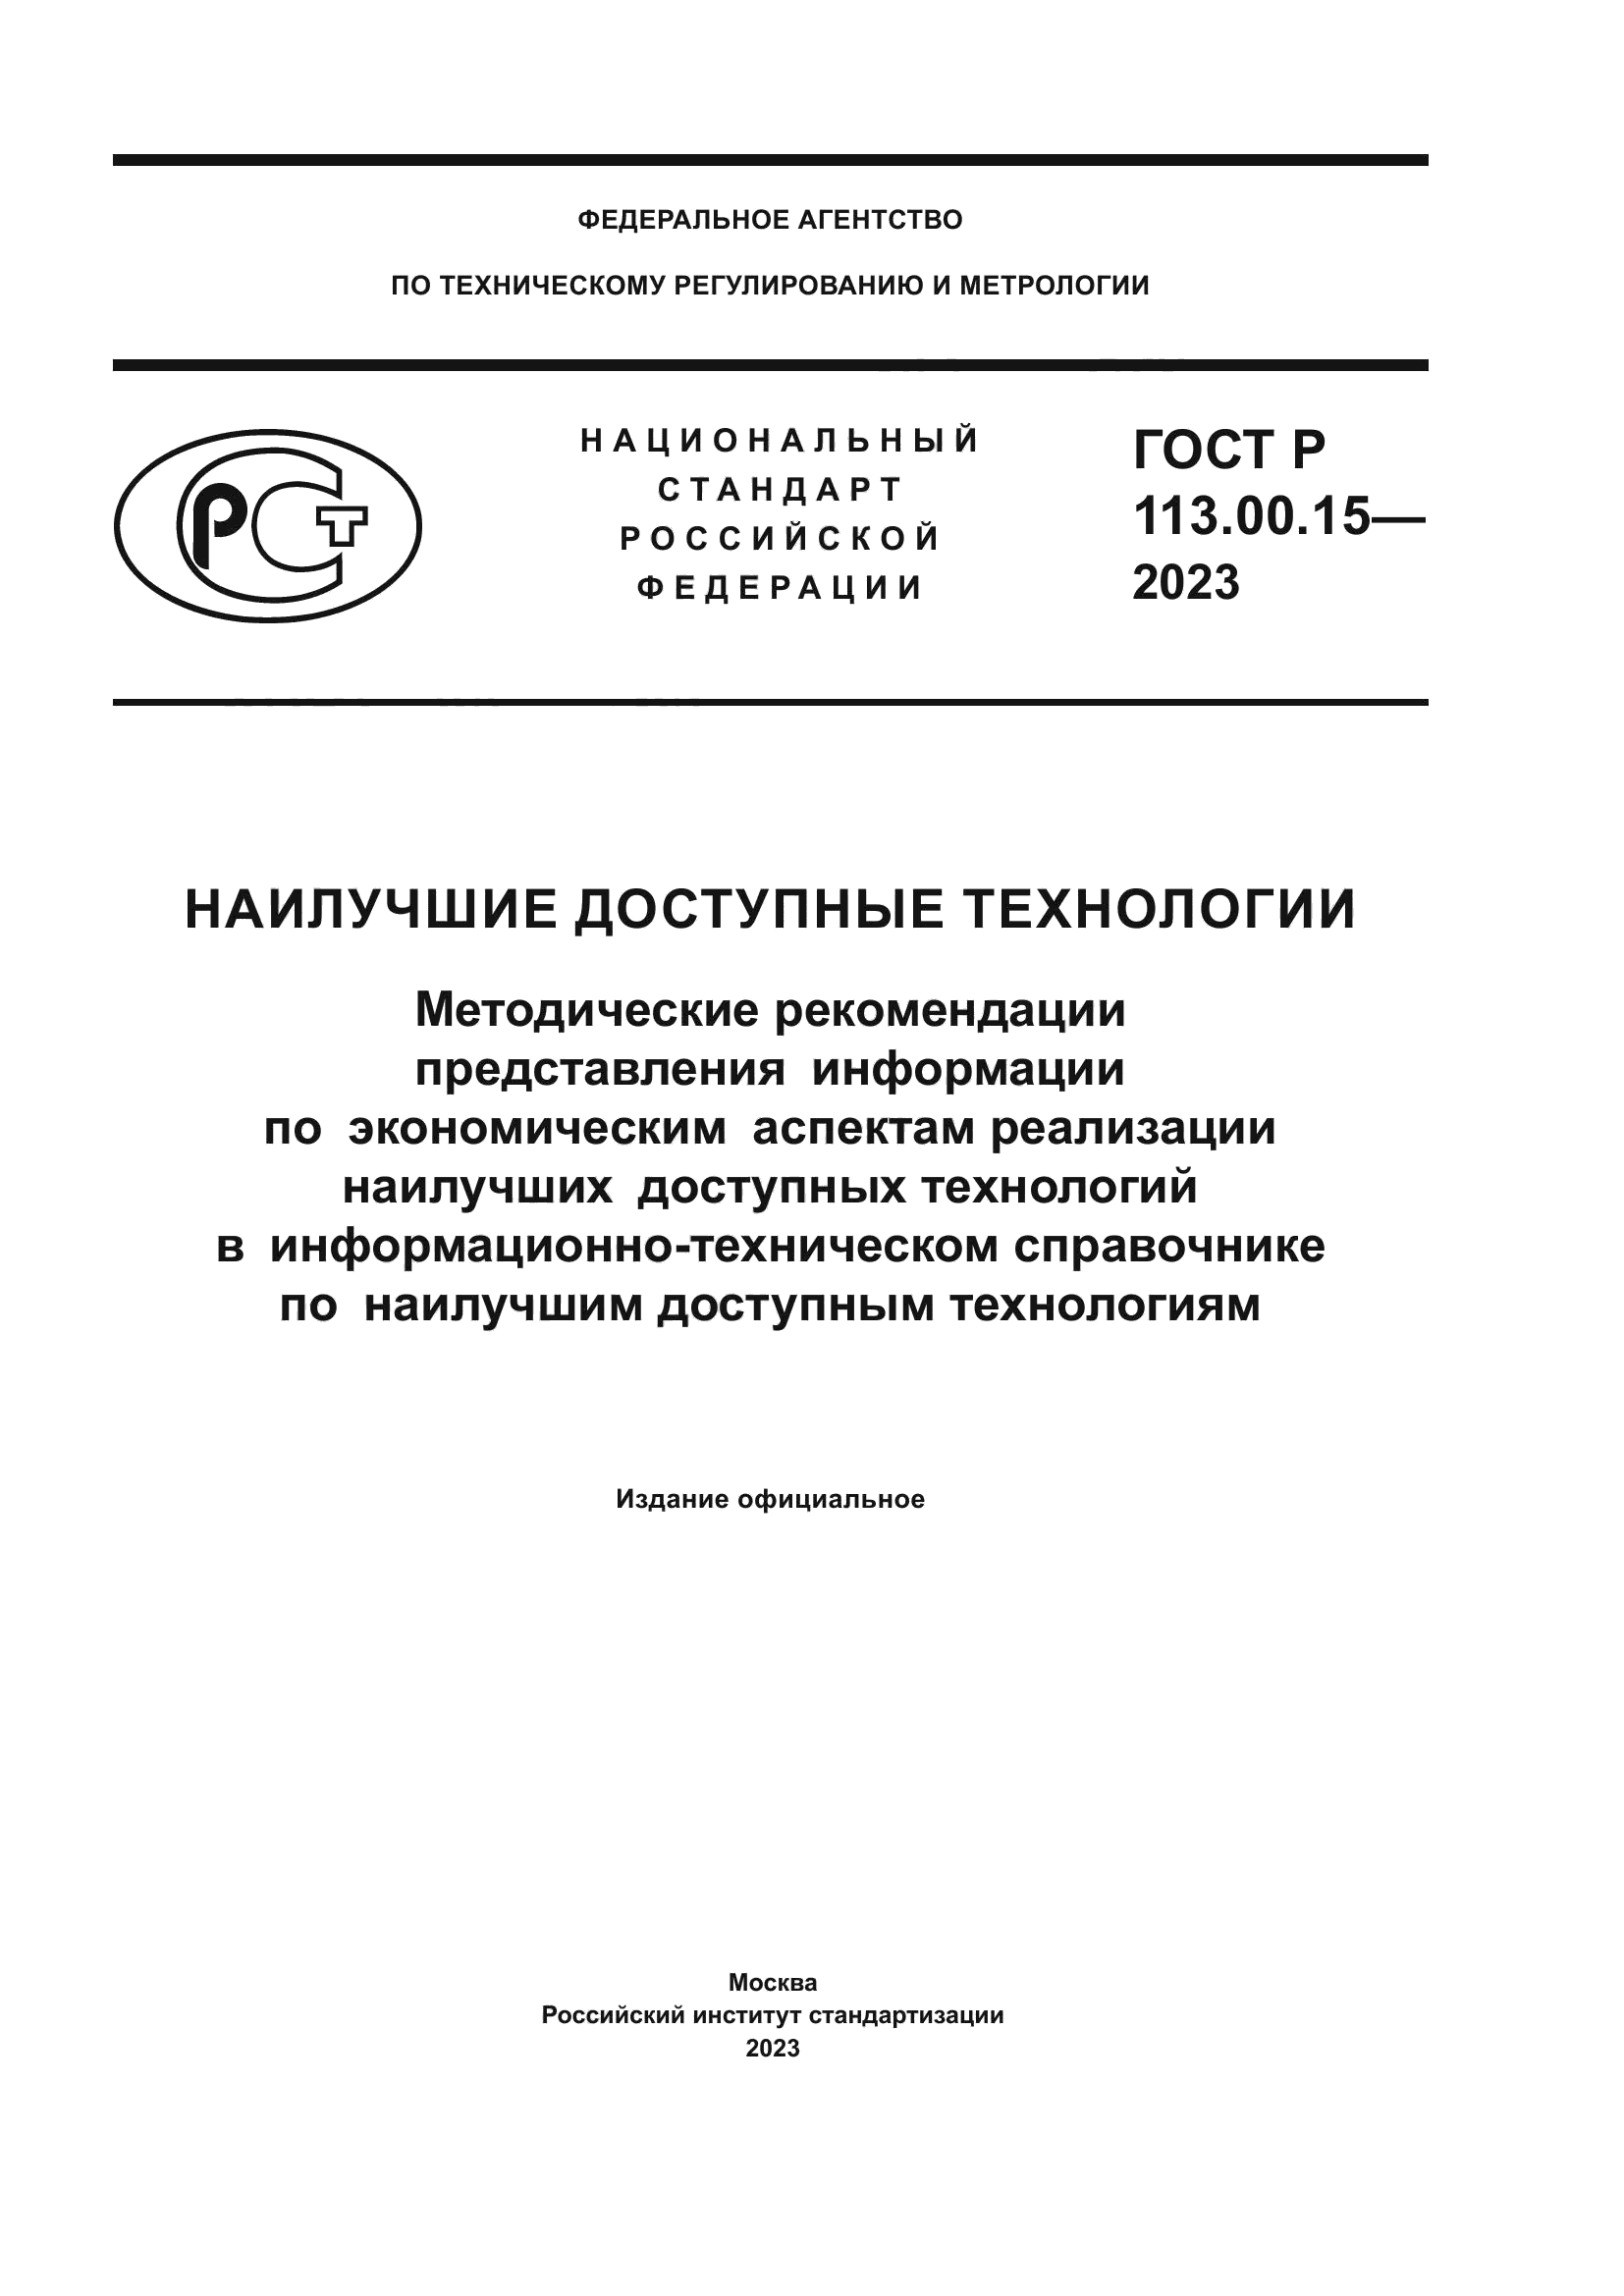 ГОСТ Р 113.00.15-2023